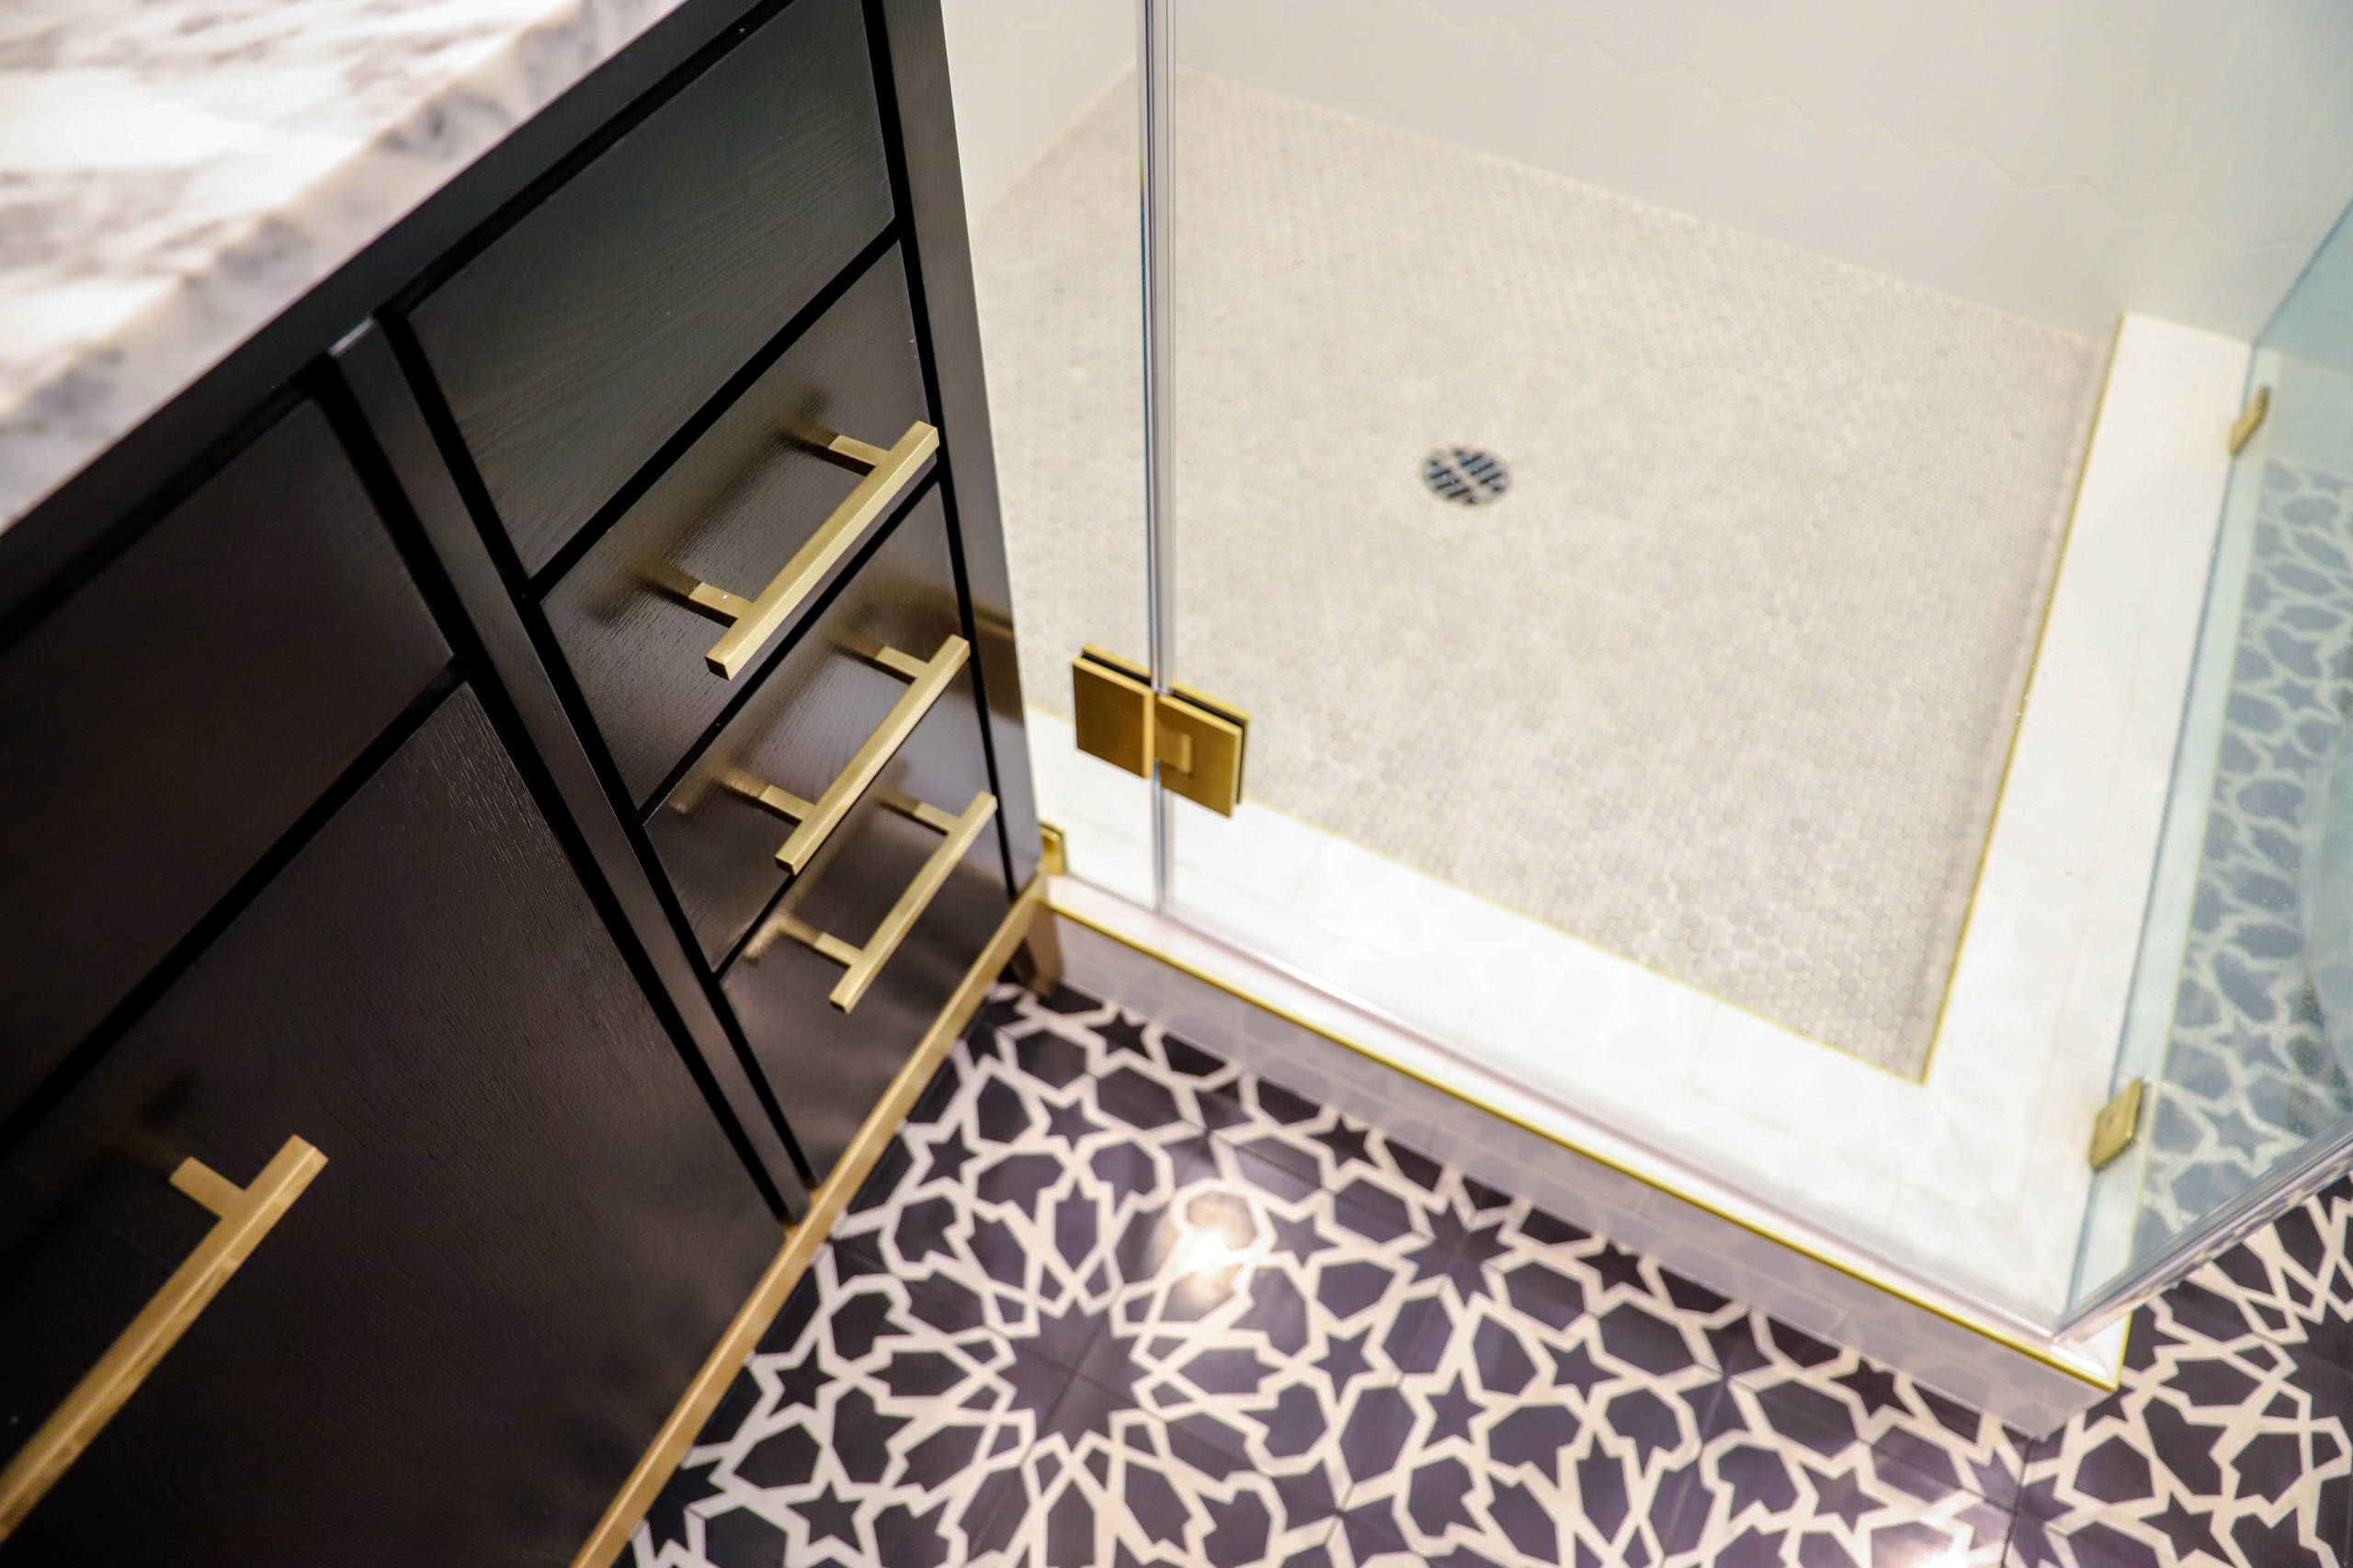 Decorative Tiled Flooring, Tiled Shower Floor & Vanity